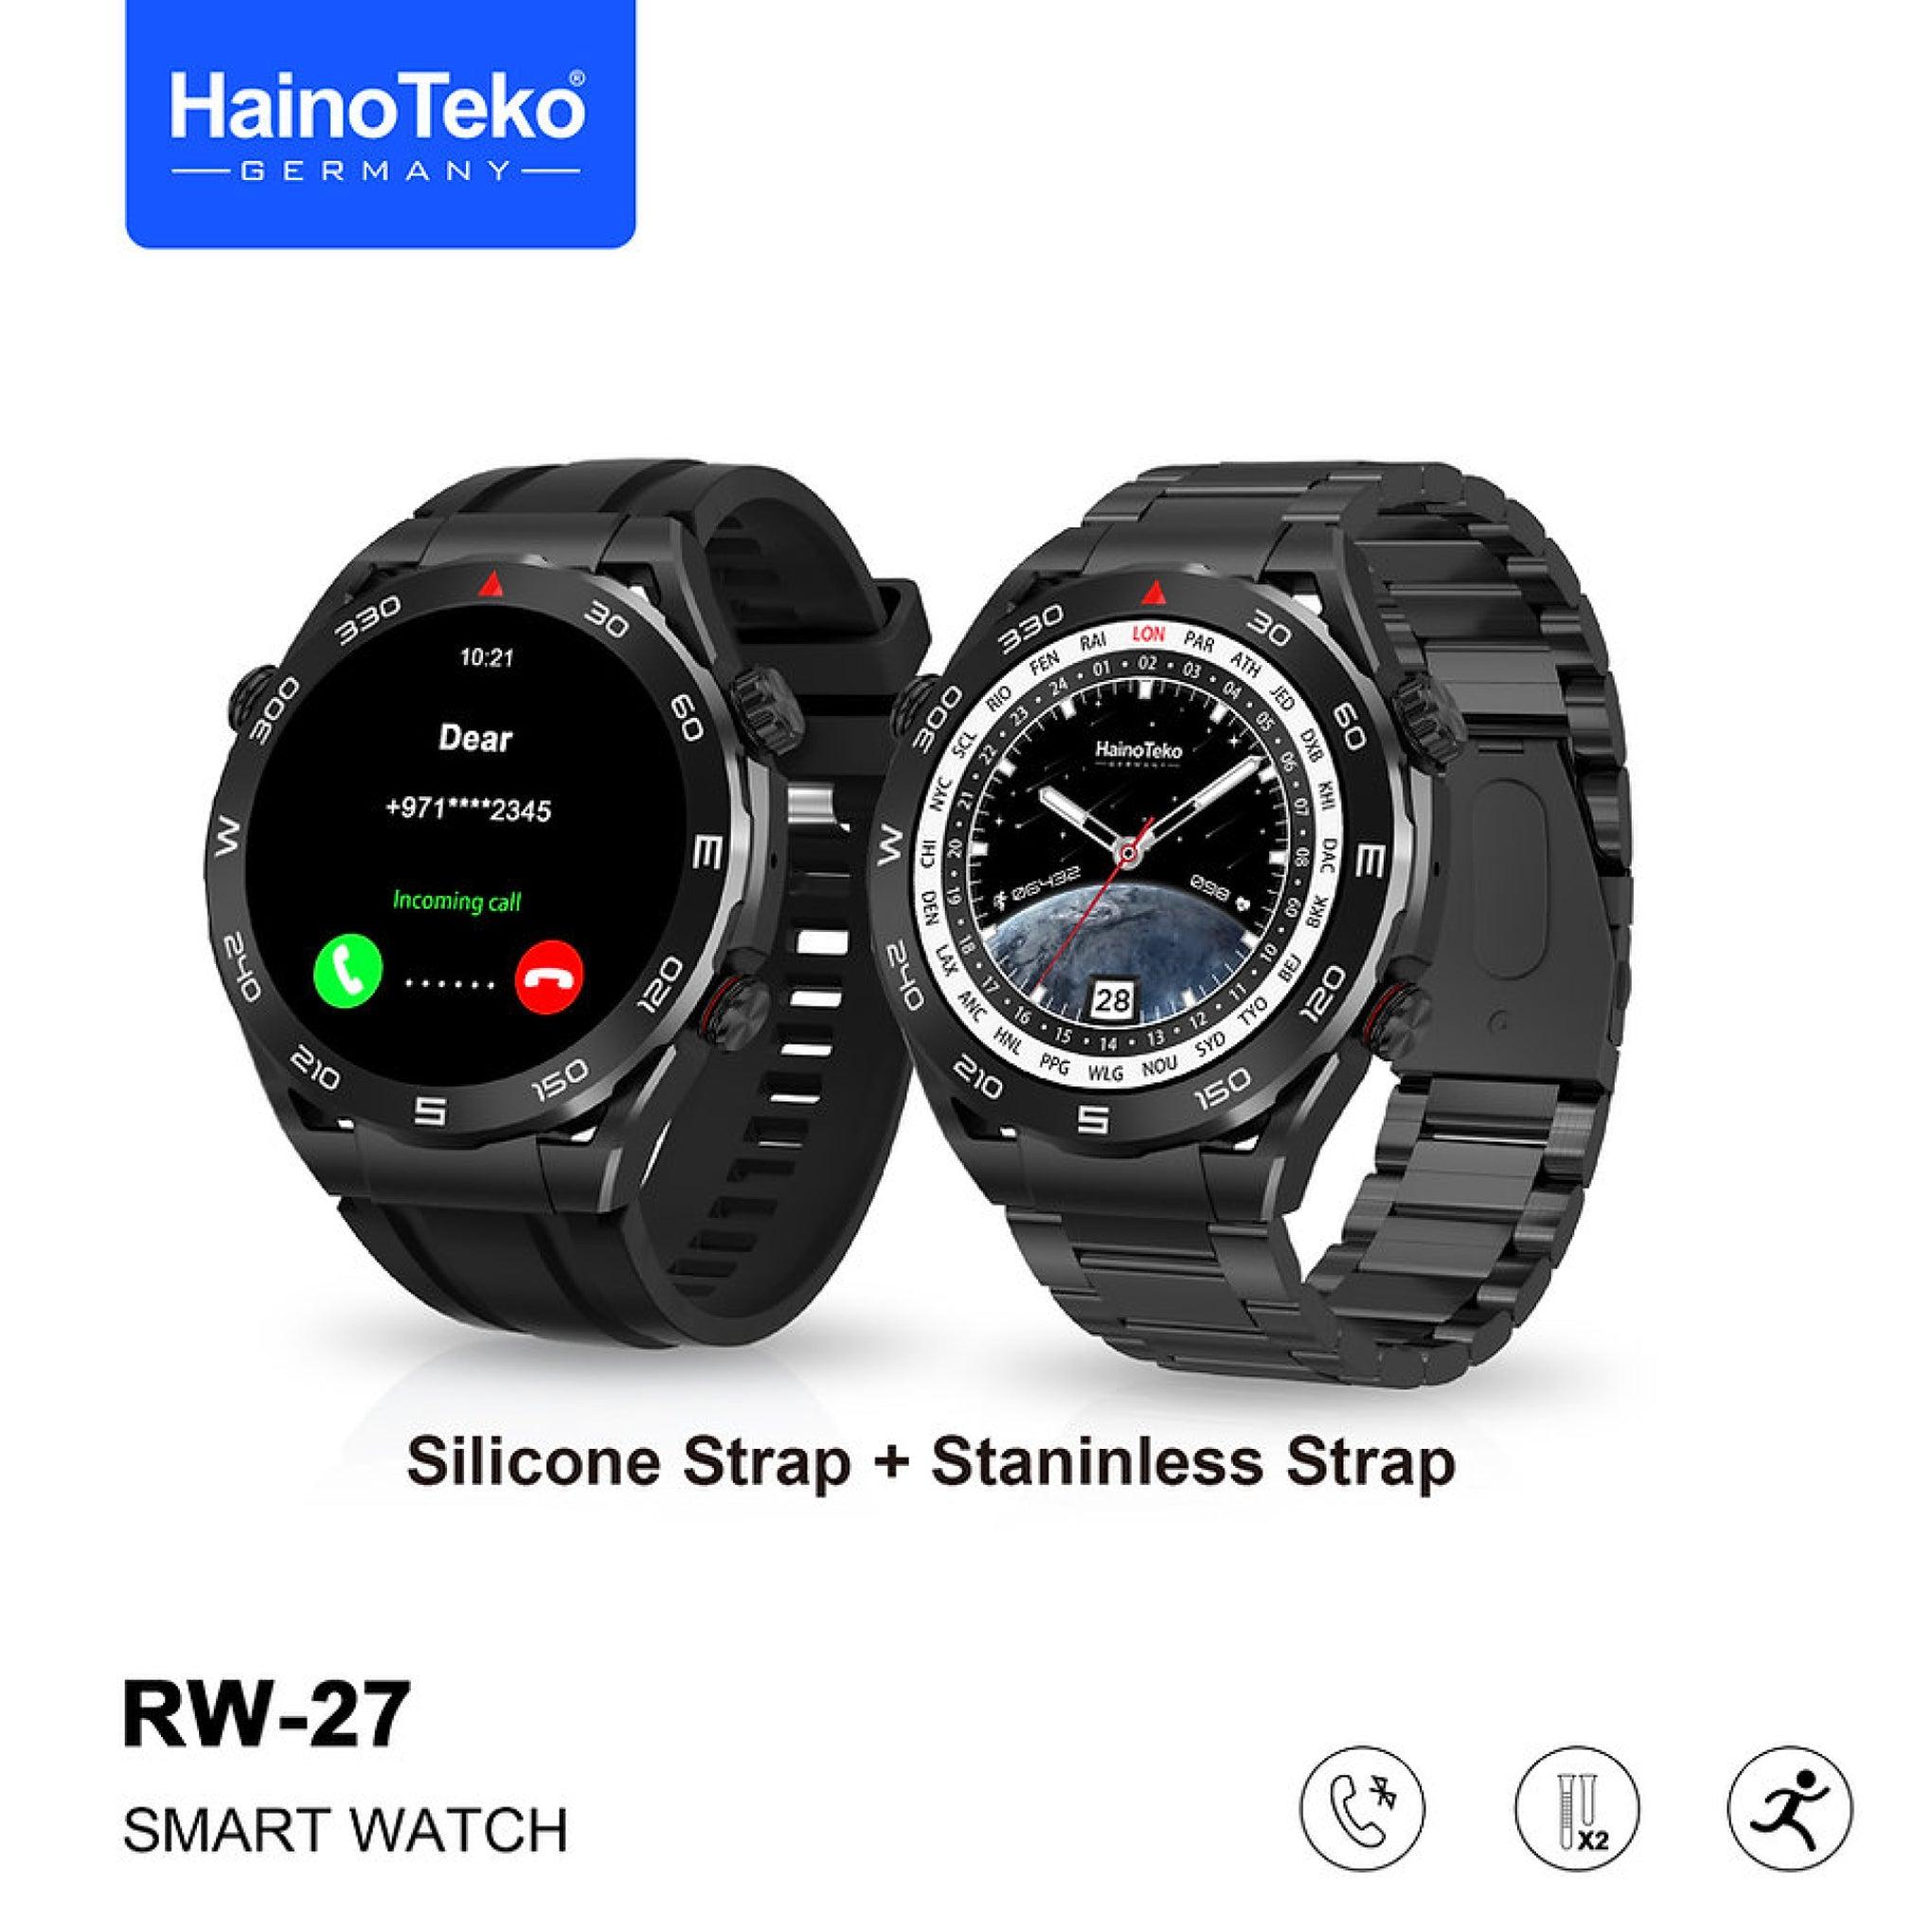 ساعة يد ذكية رجالية 27 RW بحزام دائري وشاحن لاسلكي هاينو تيكو Haino Teko Germany Smart Watch Rw 27 Round Two Set Strap And Wireless Charger For Men's